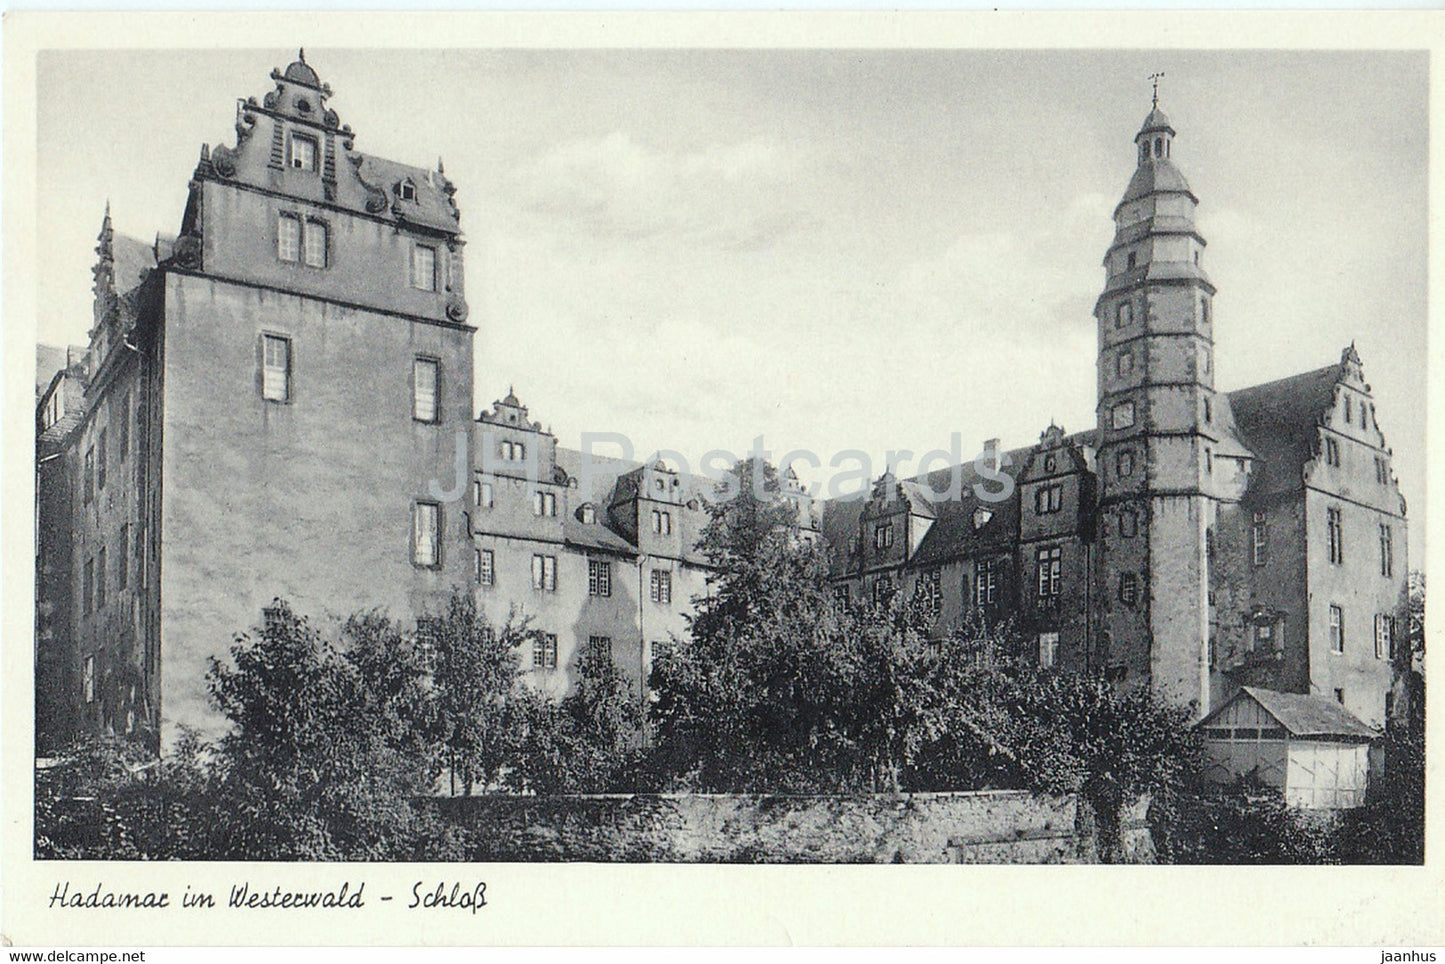 Hadamar im Westerwald - Schloss - castle - Germany - unused - JH Postcards